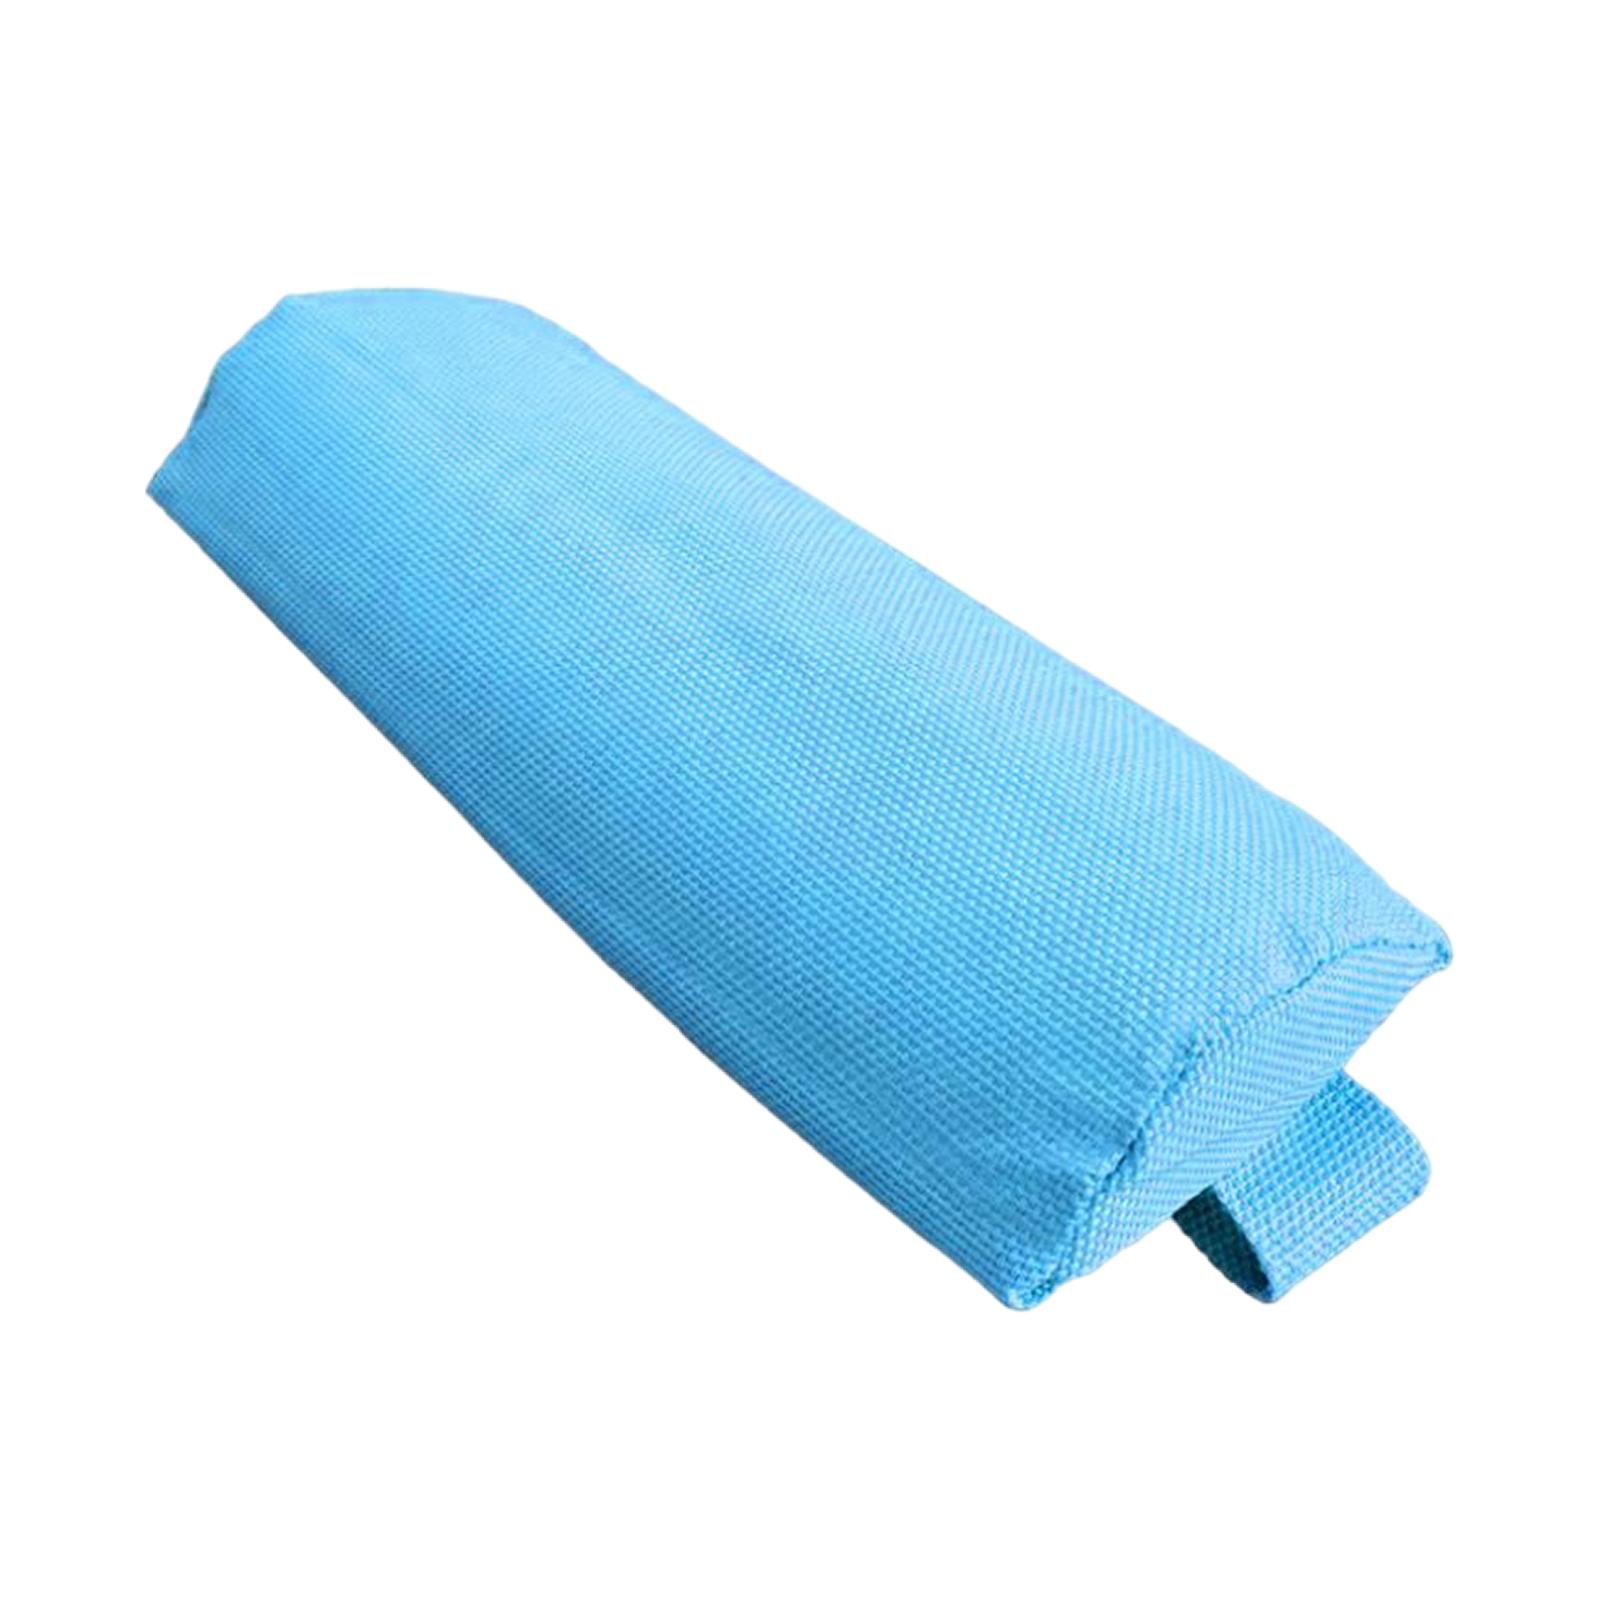 Comfortable Head Cushion Pillow for Folding Chair Beach Patio Chair Headrest blue - image 1 of 6